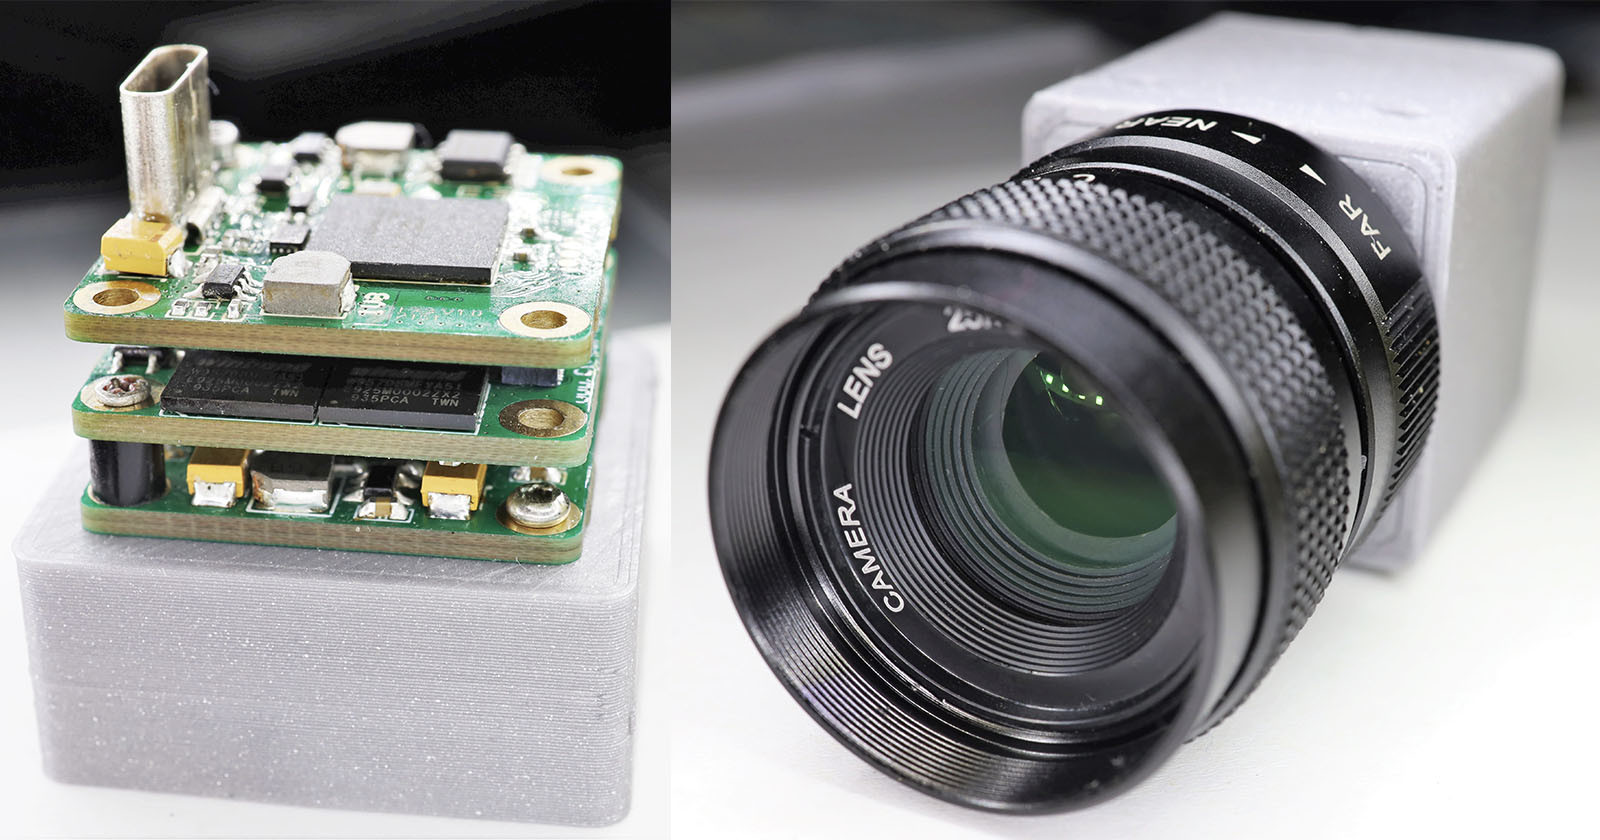  print your own camera interchangeable sensor 